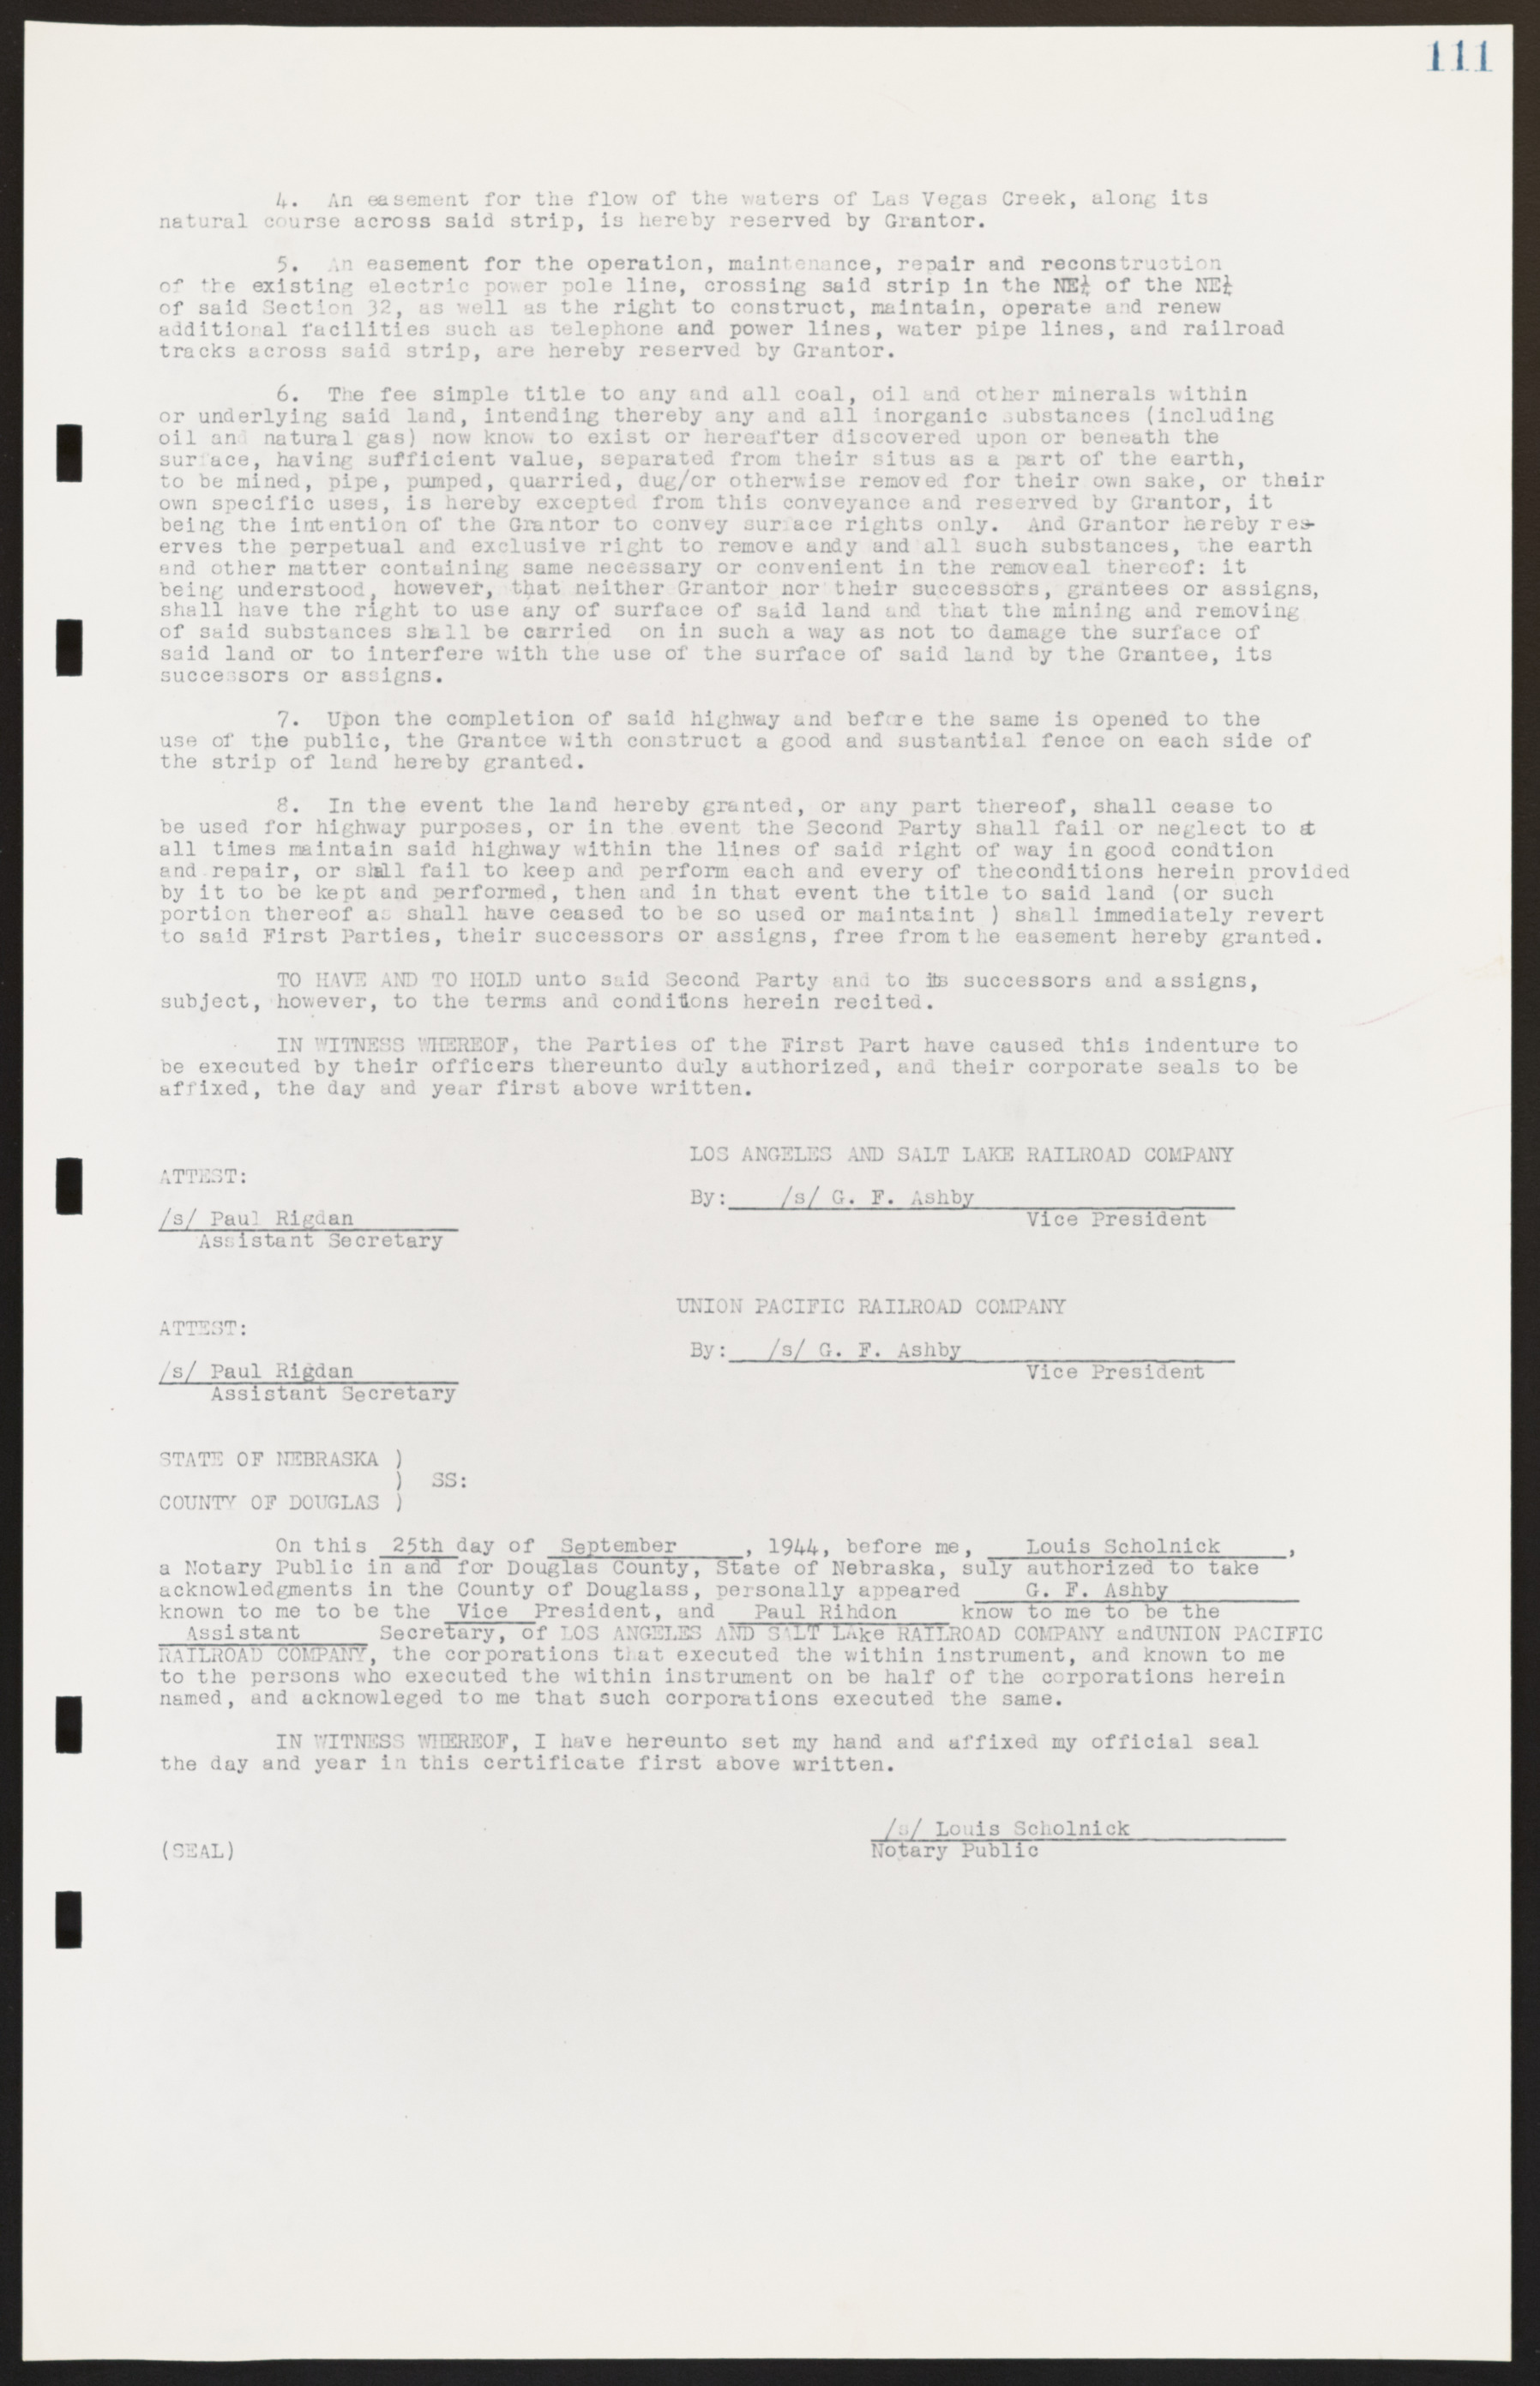 Las Vegas City Commission Legal Documents, February 29, 1944 to February 21, 1945, lvc000016-41